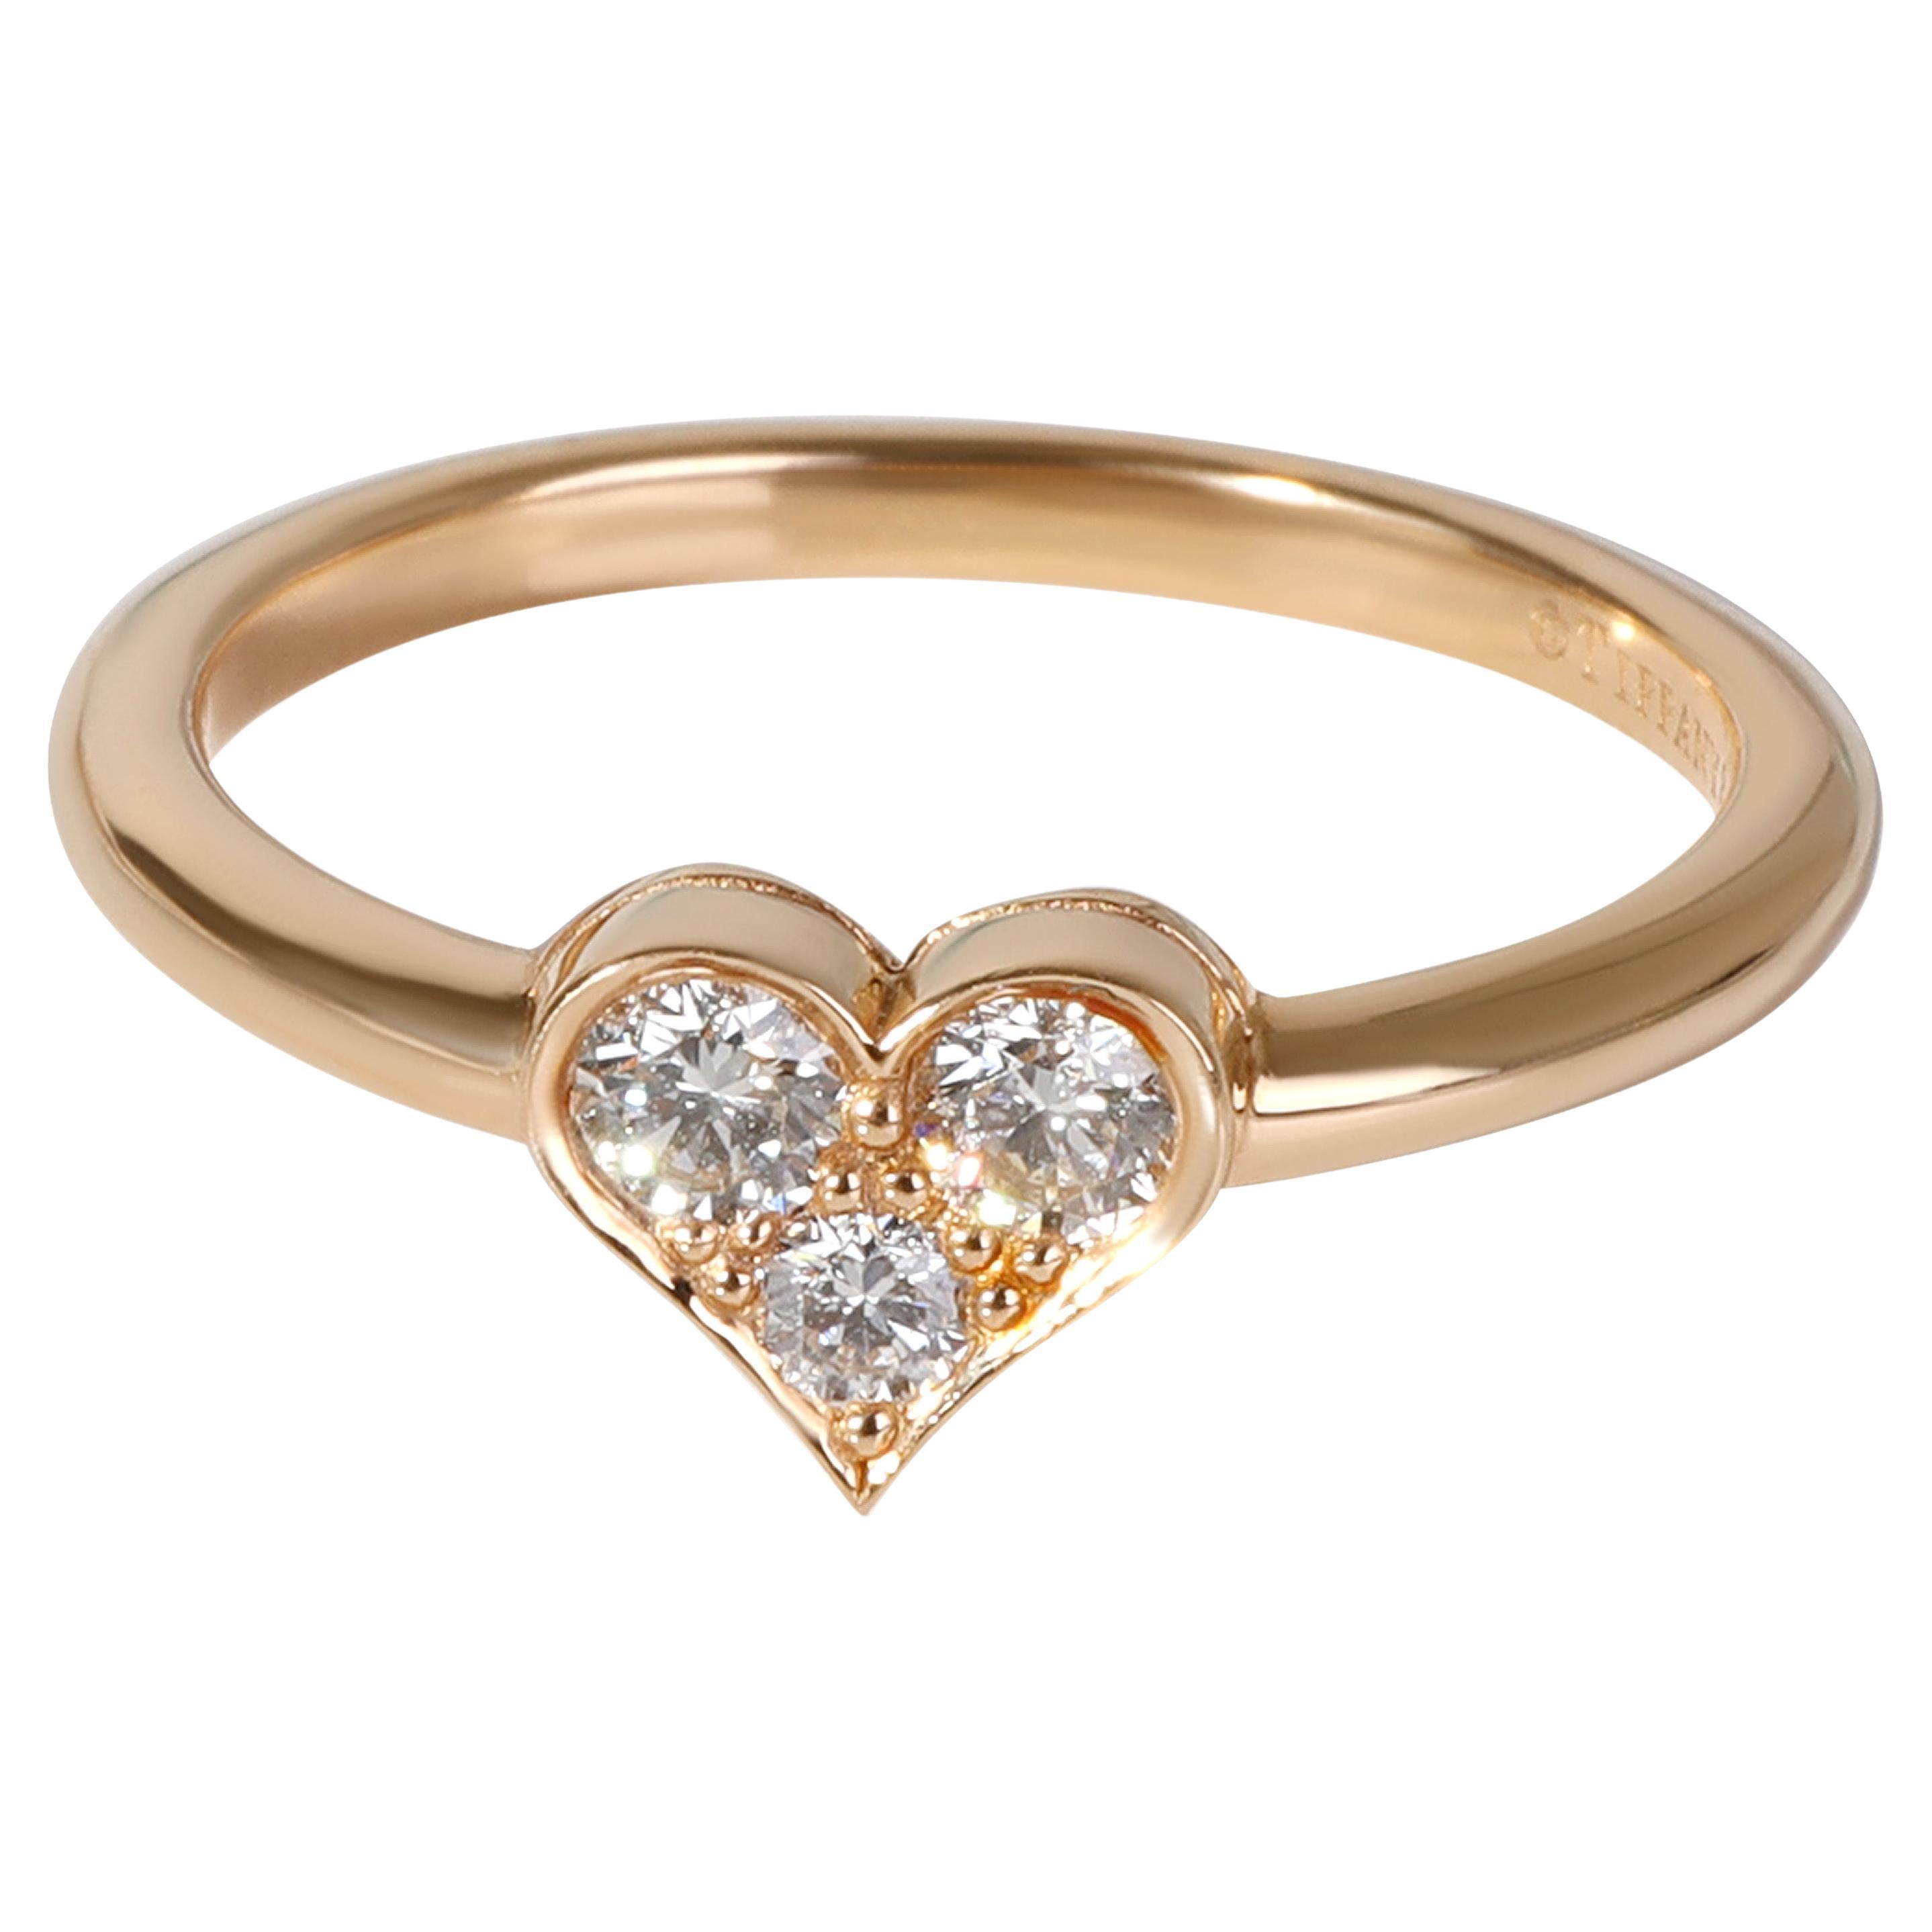 Tiffany & Co. Hearts Diamond Ring in 18K Rose Gold 0.19 CTW